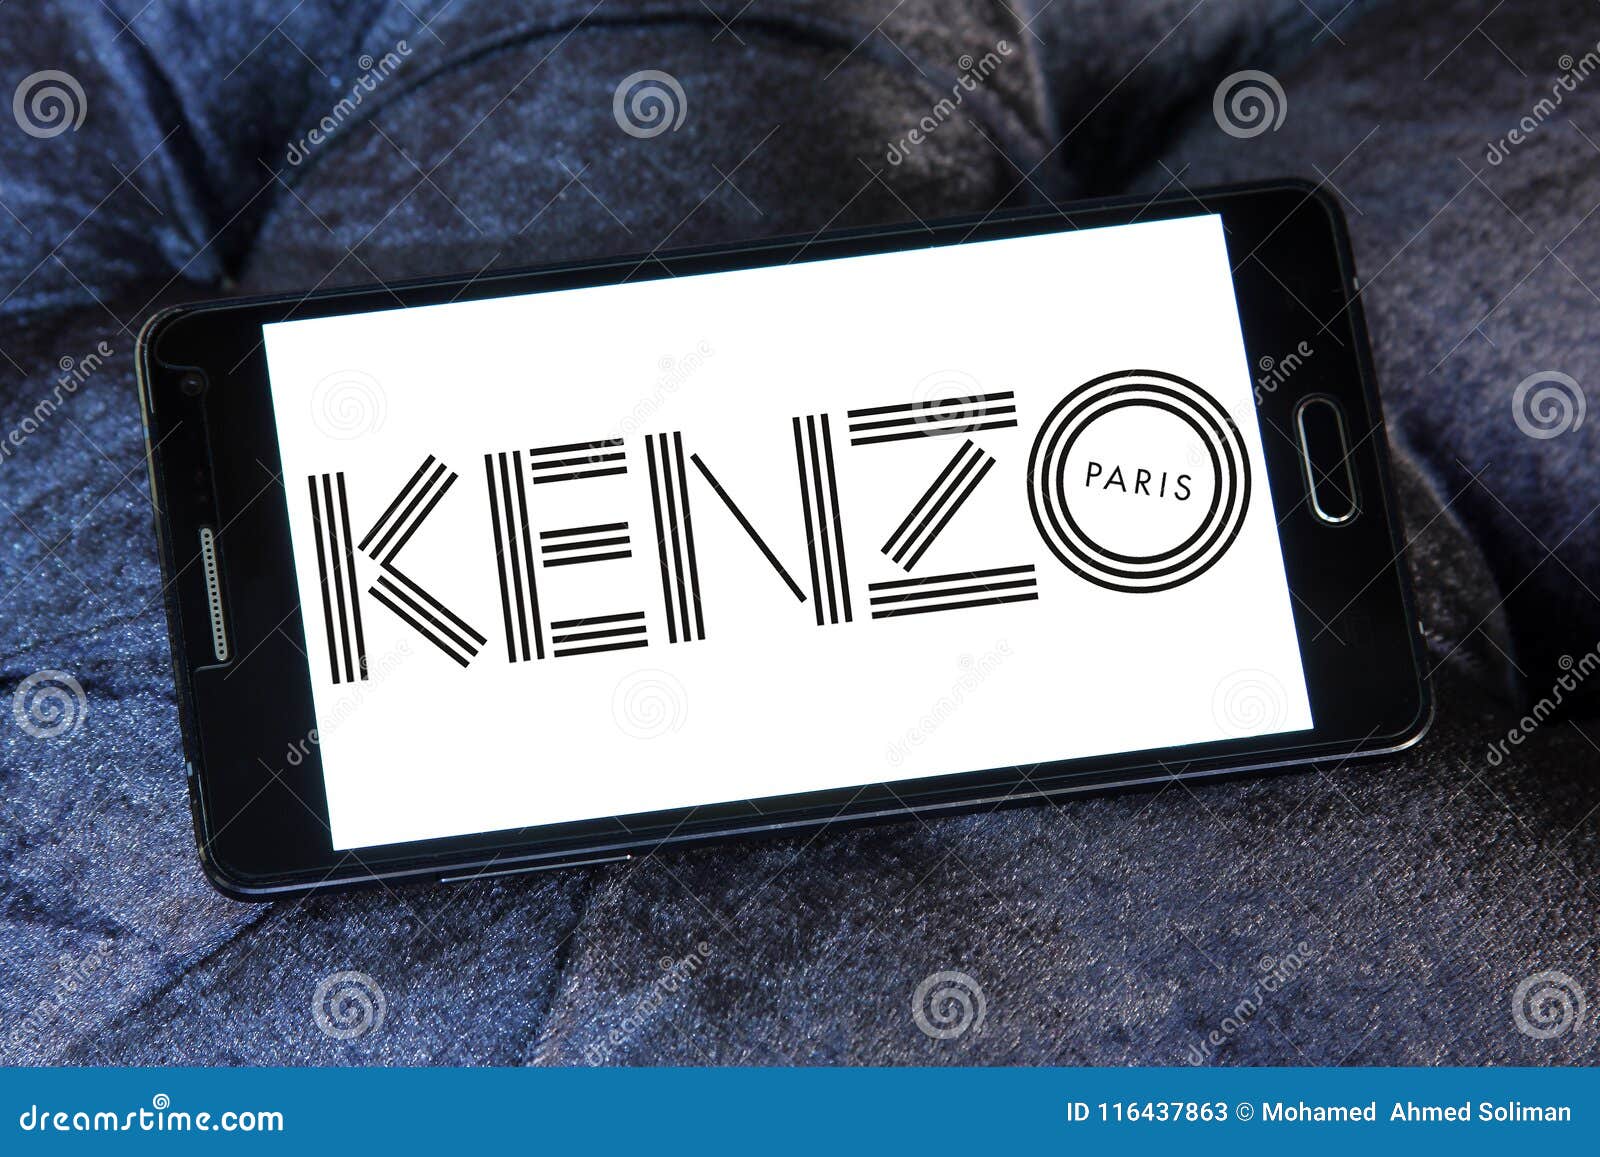 kenzo brand logo